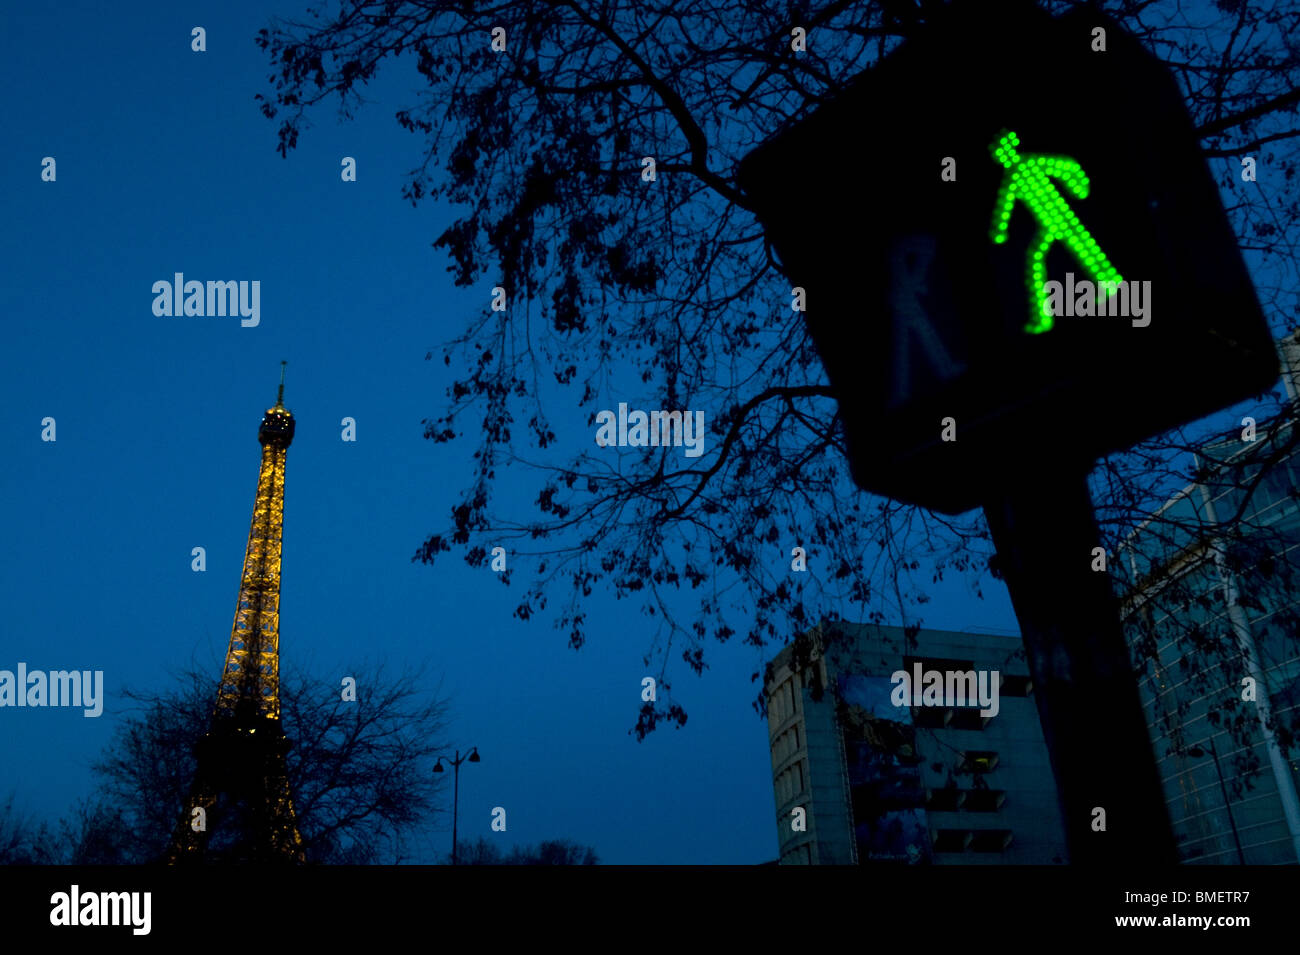 traffic lights, feu de signalisation, homme rouge, green man, tour eiffel, Eiffel tower Stock Photo